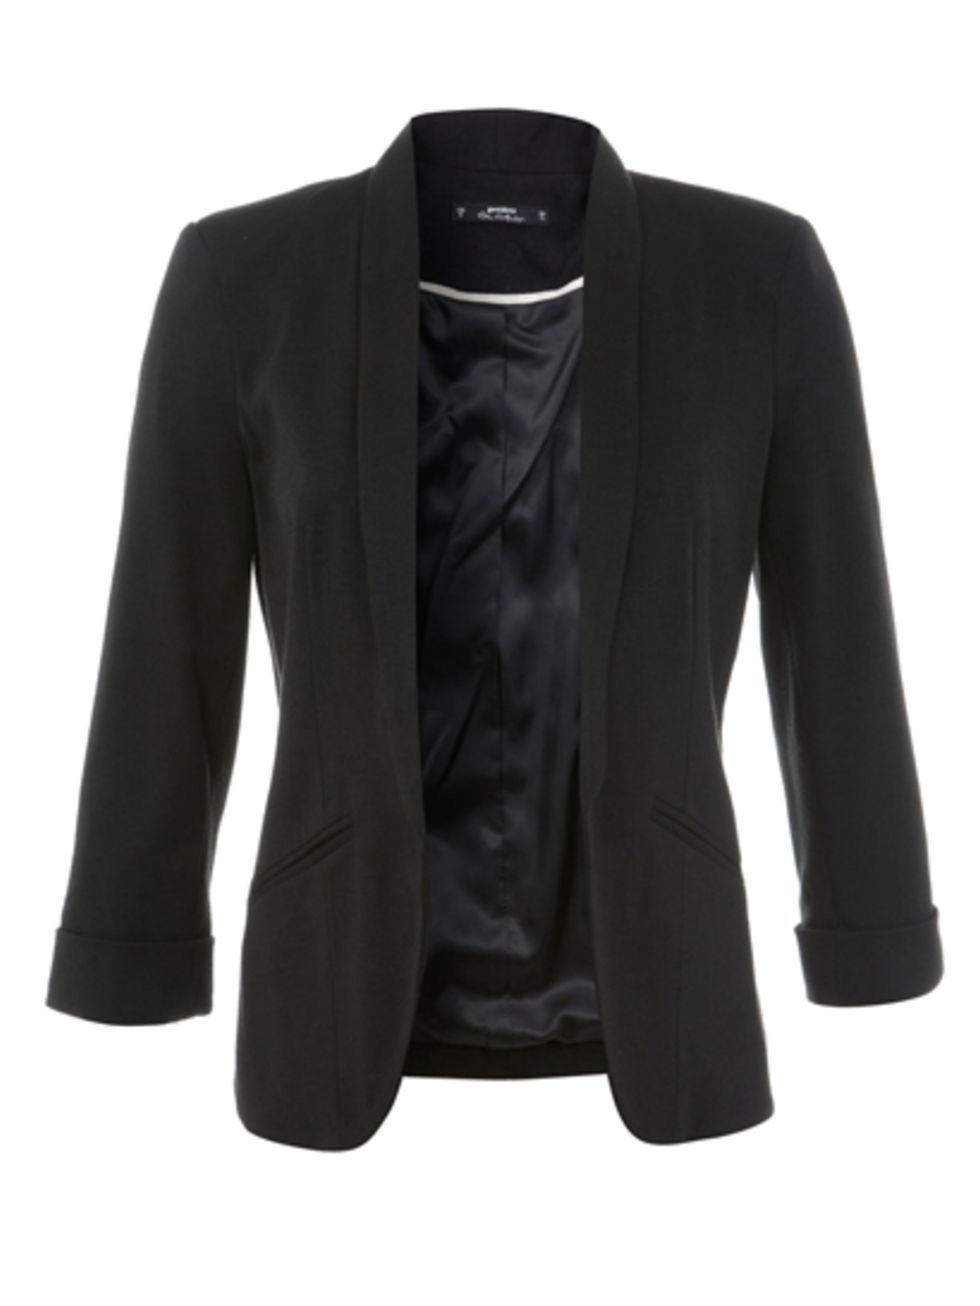 <p>Black blazer, £39 at <a href="http://www.missselfridge.com/en/msuk/product/clothing-299047/coats-jackets-299068/blazers-299194/petites-black-jersey-blazer-3232384?refinements=category~%5b208080%7c208077%5d&bi=1&ps=40">Miss Selfridge</a>.</p>